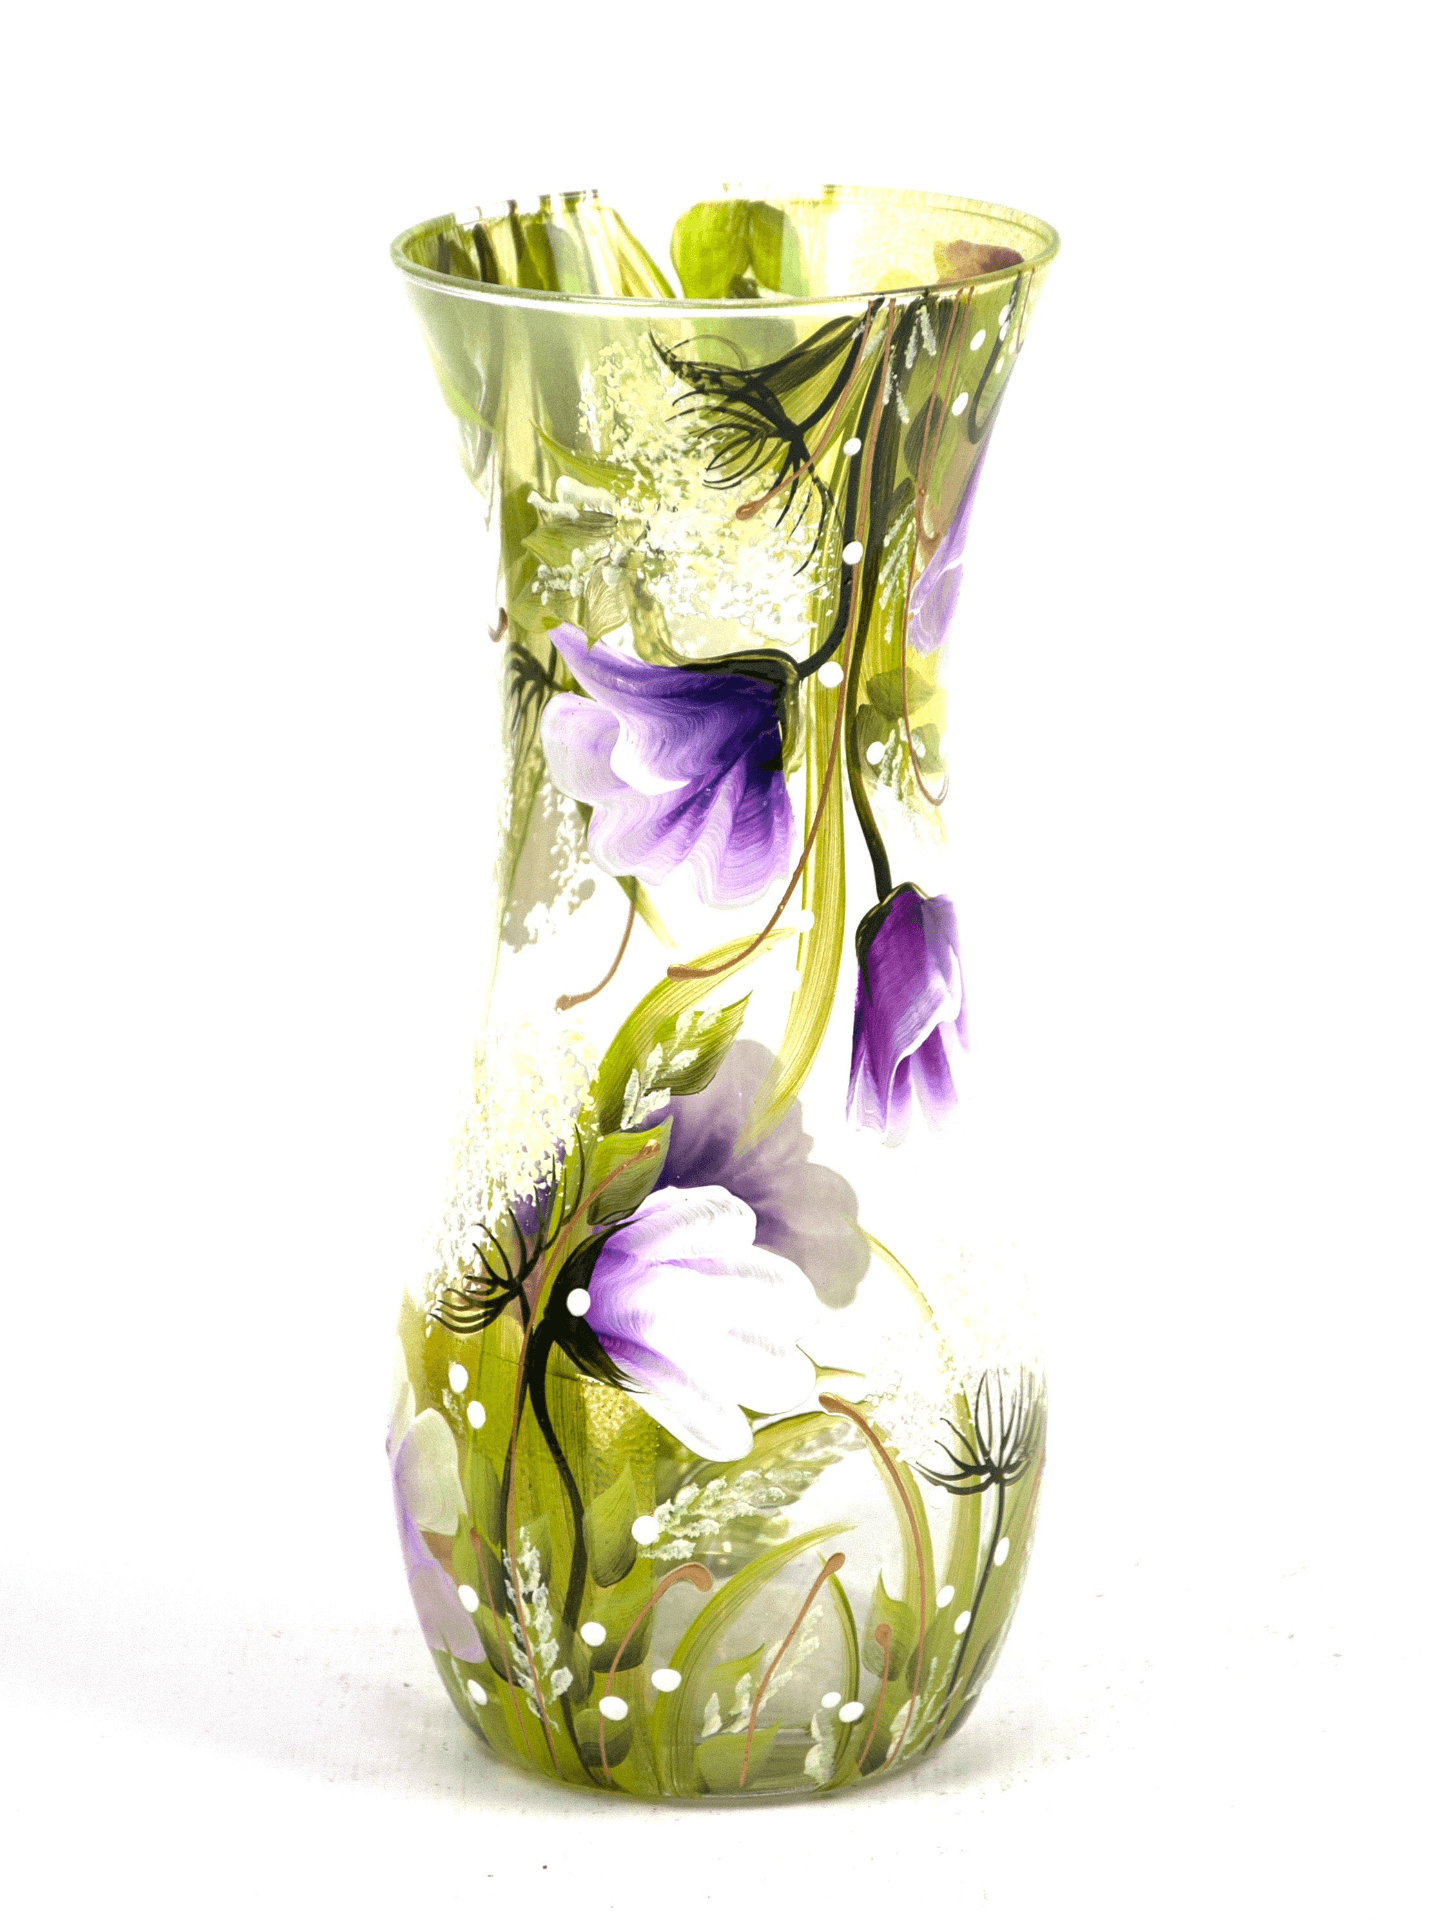 table green art decorative glass vase 8268/260/lk293  